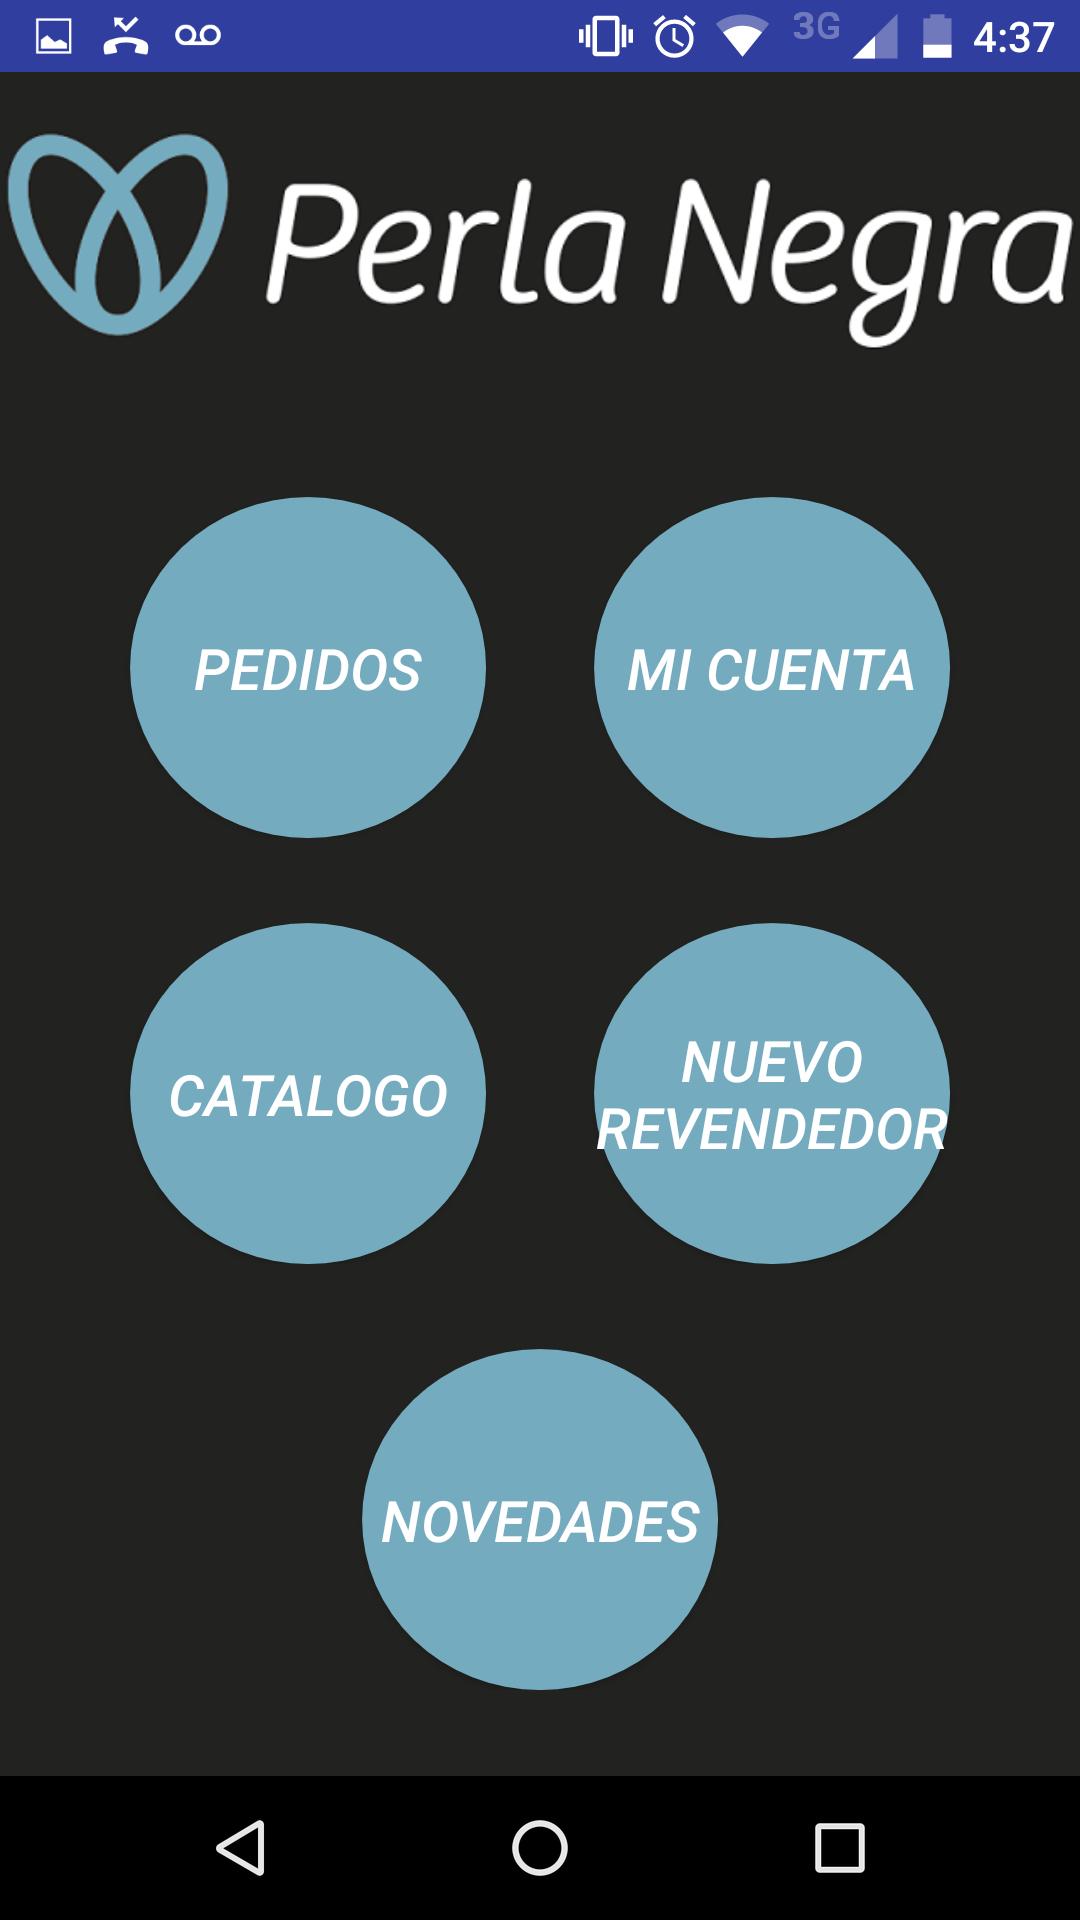 Pedidos Perla Negra for Android - APK Download